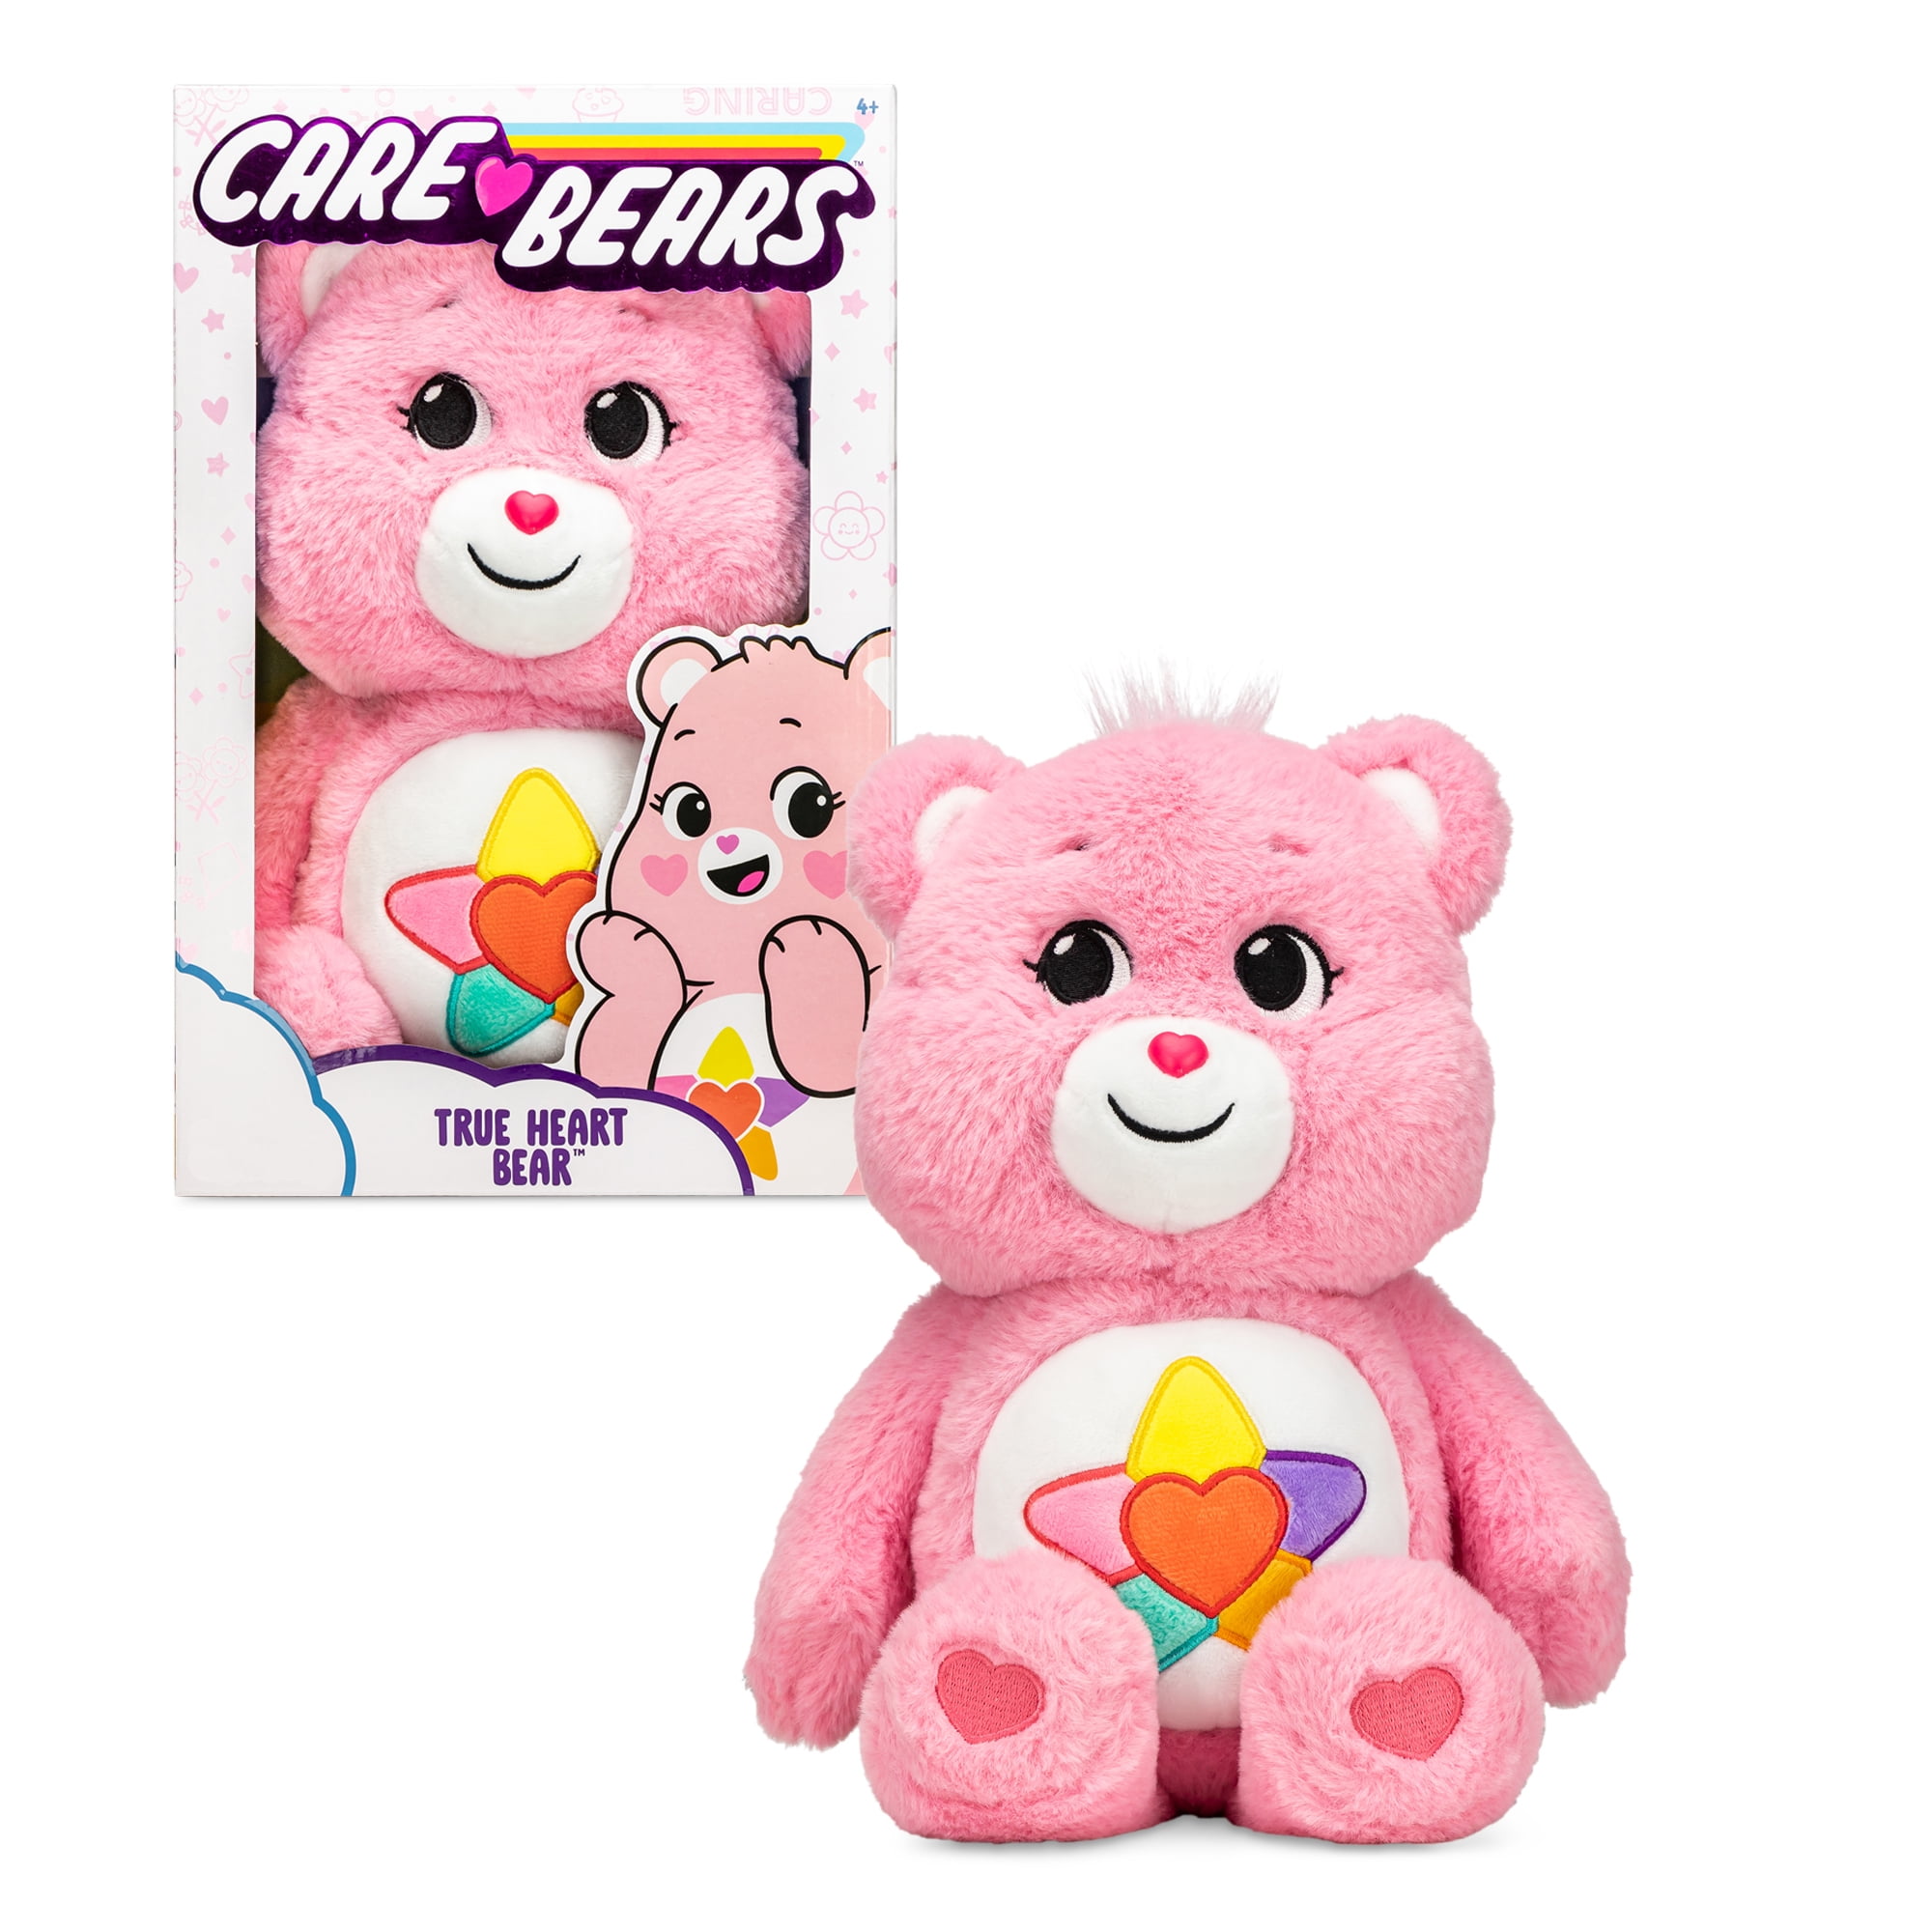 NEW Teddy Bear HAPPY 40th ANNIVERSARY Cute Cuddly Gift Present 40 Years 